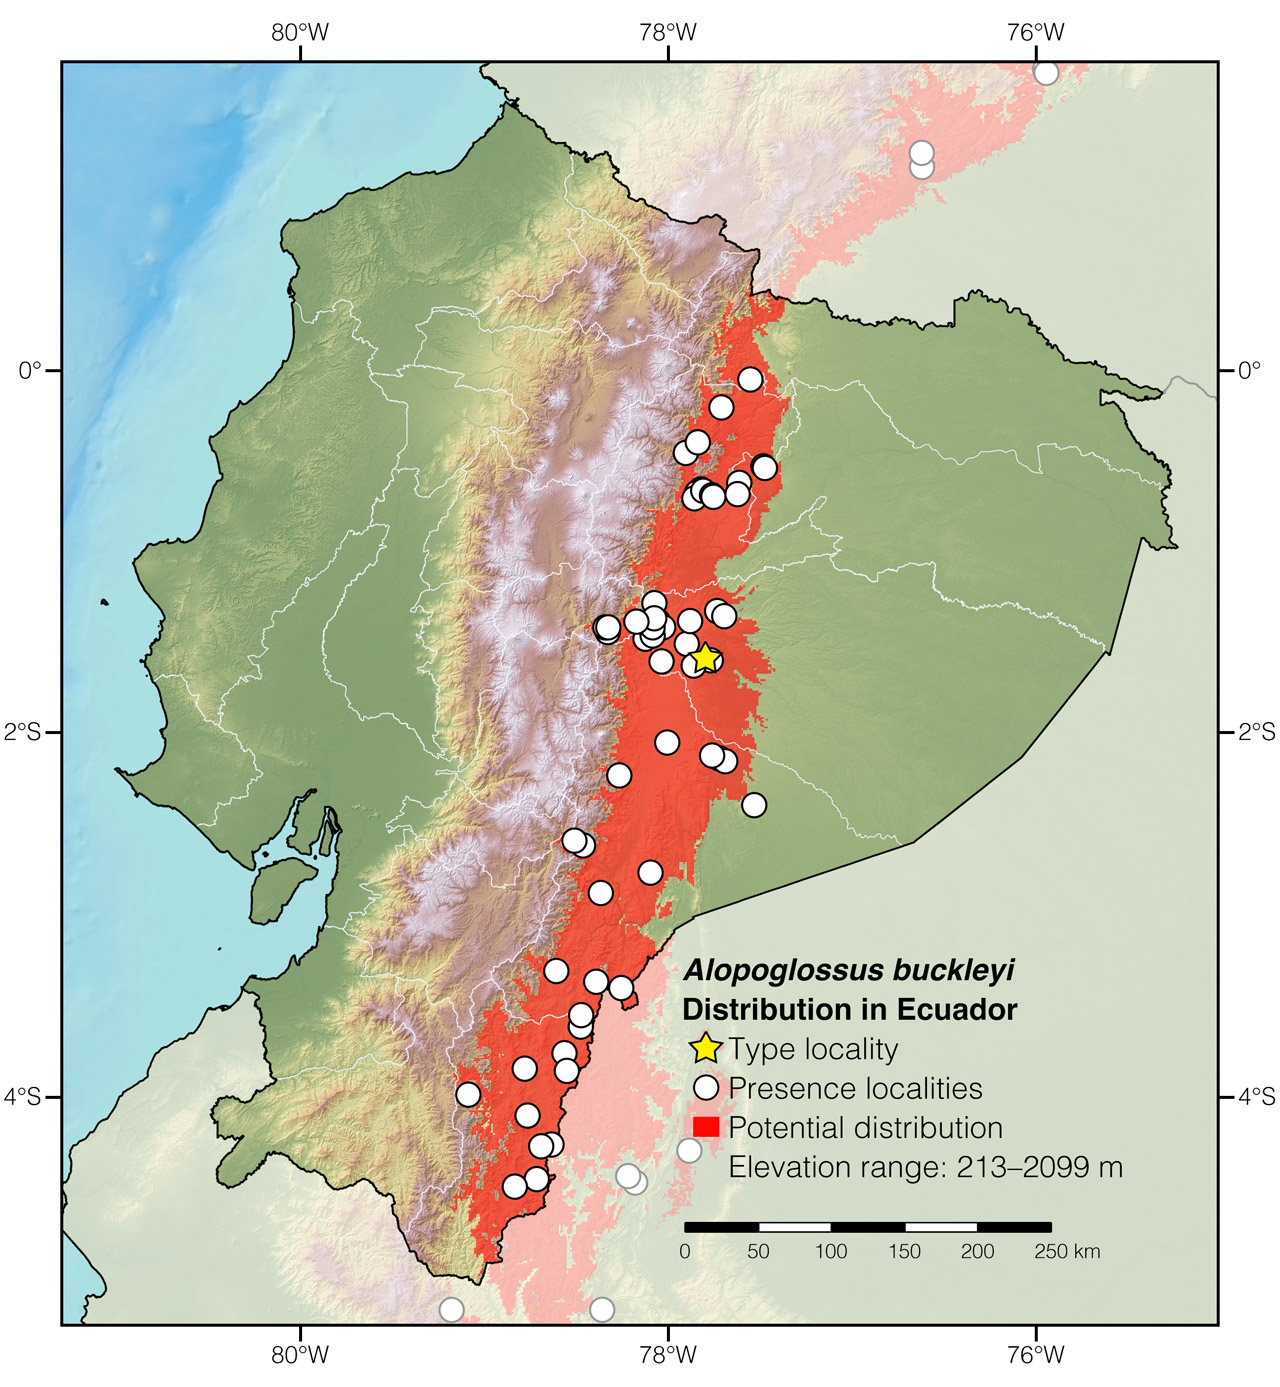 Distribution of Alopoglossus buckleyi in Ecuador